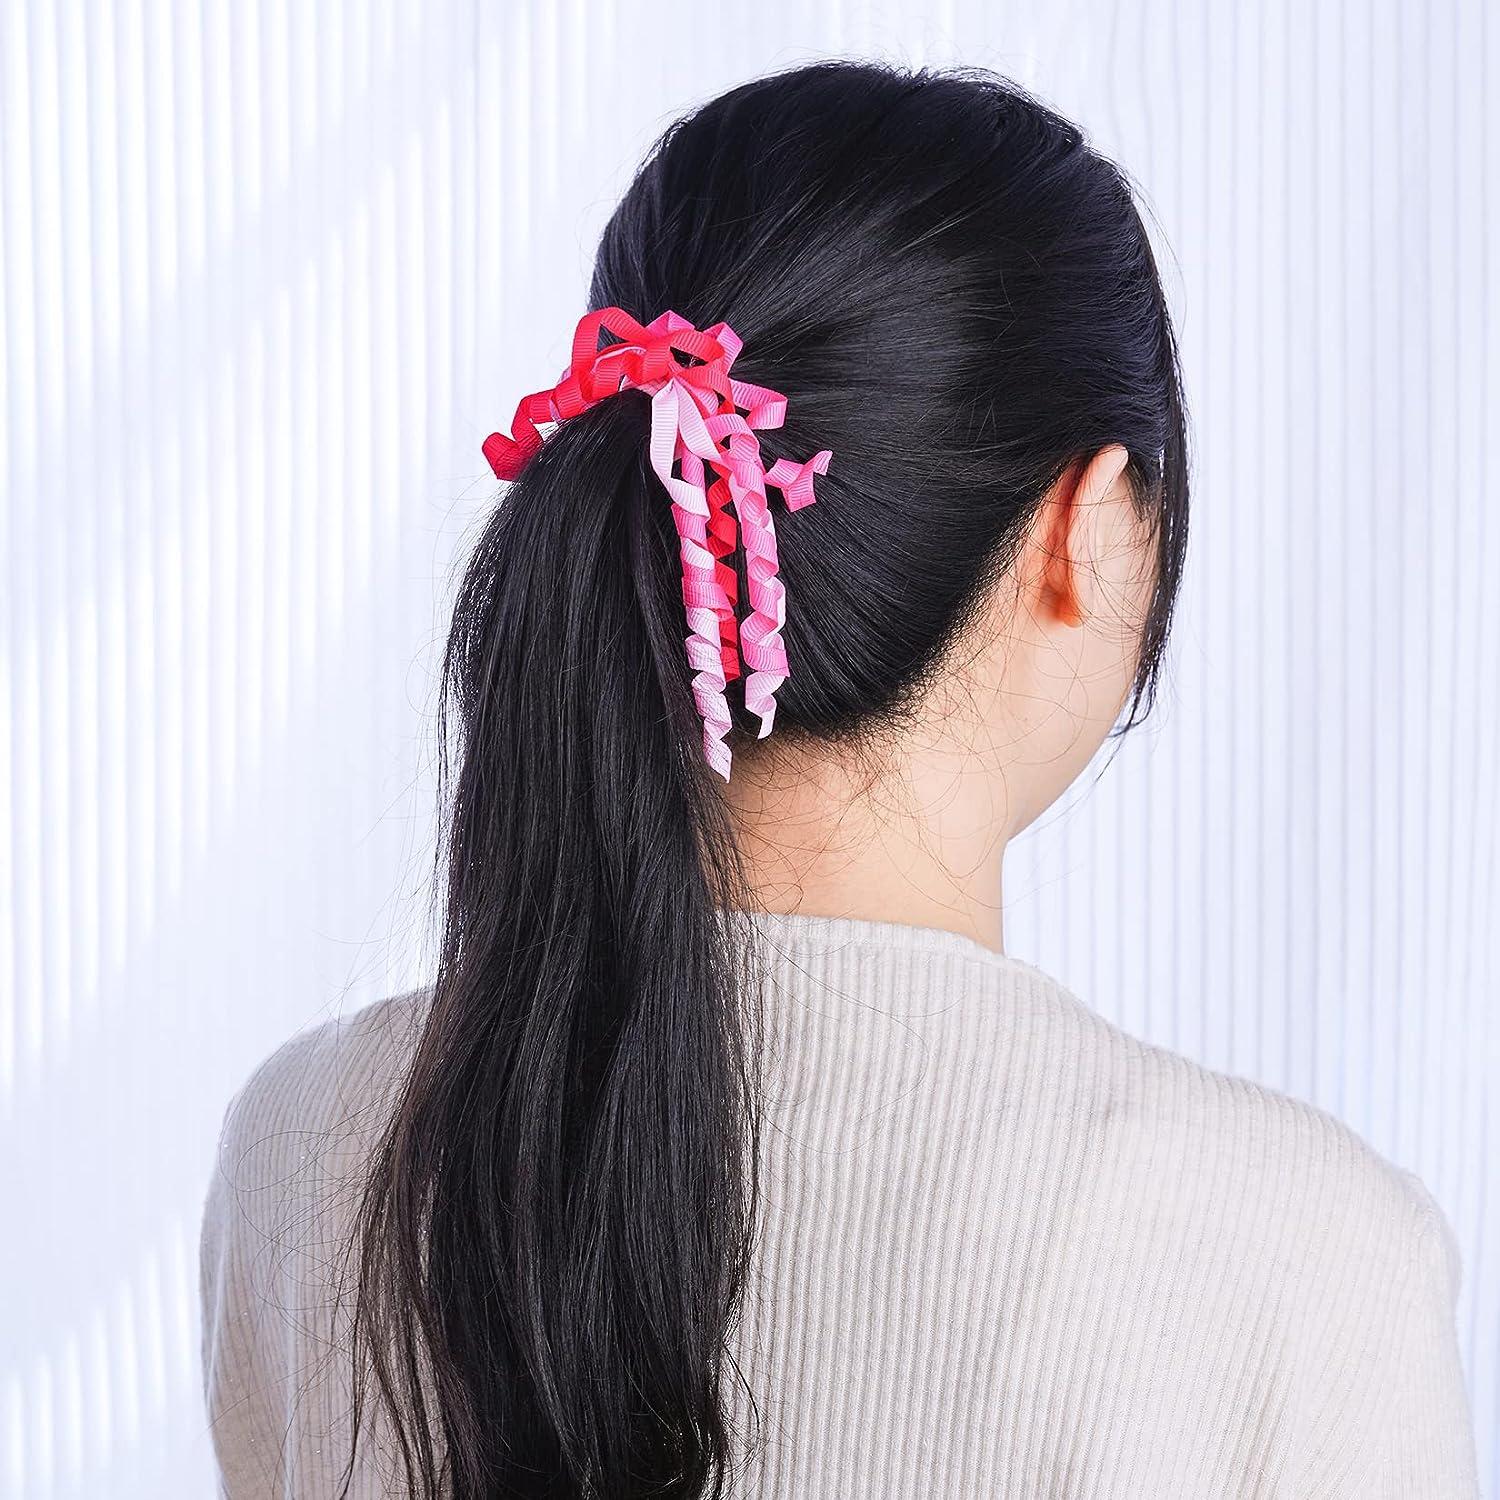 Sucrain 18 PCS Girls Hair Ribbons Ties Colorful Elastic Curly